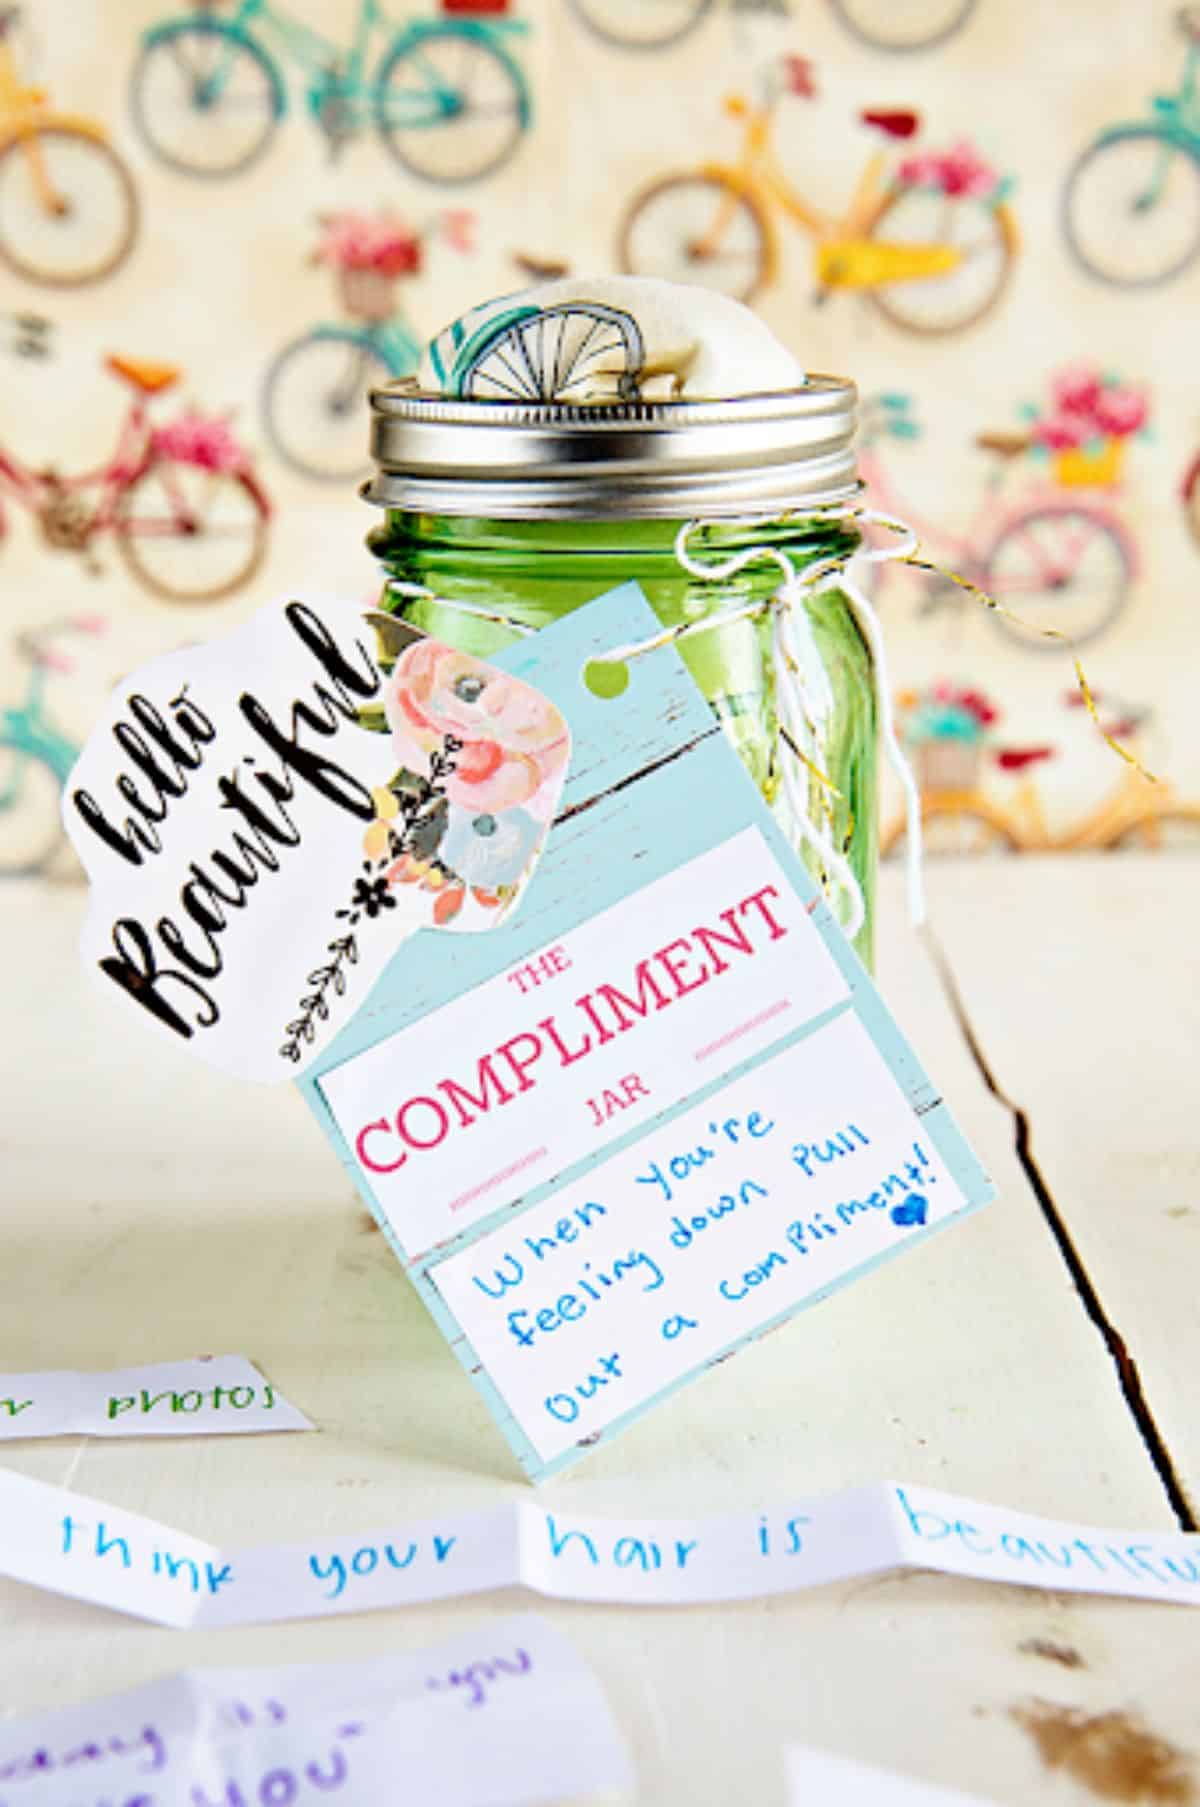 Make A Compliment Jar